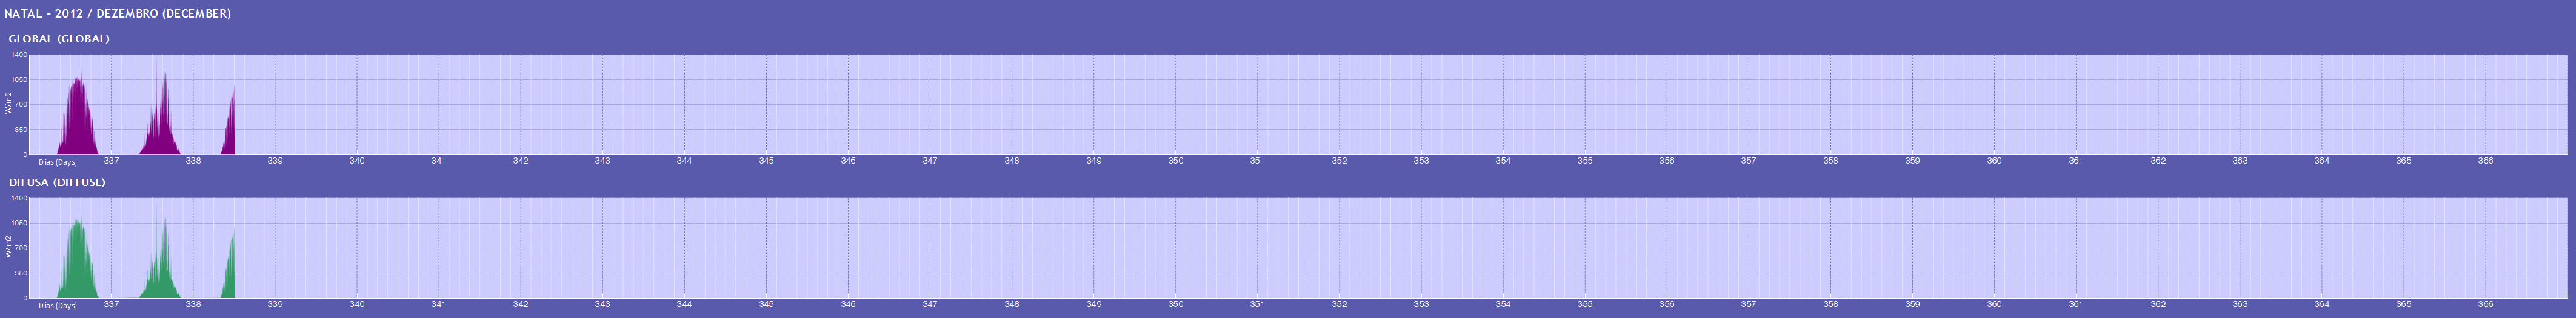 Gráficos dos Dados de 10/2012 de Natal